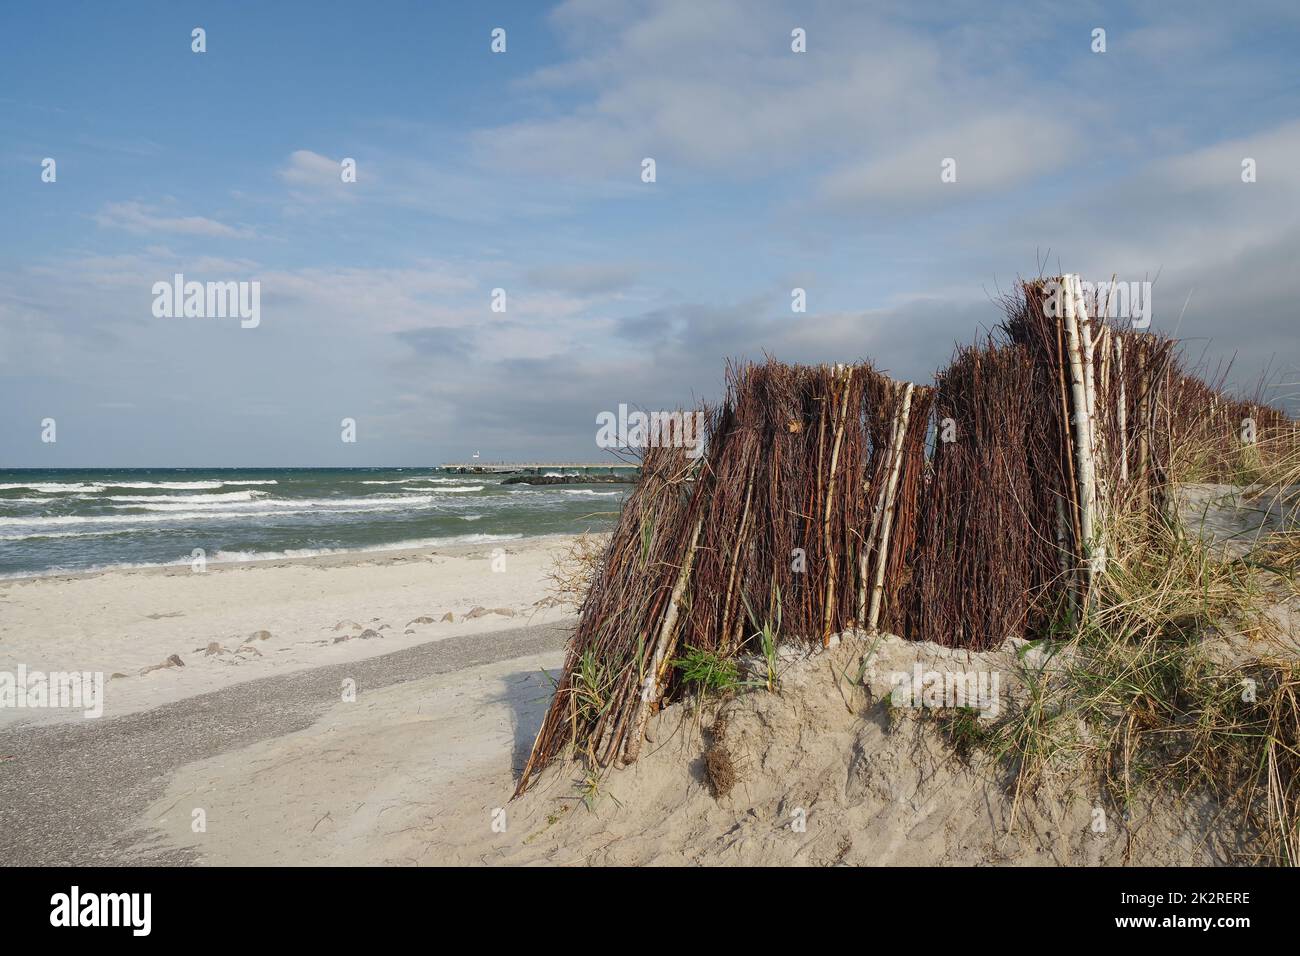 Dunes, plage, mer Baltique et pont de mer, Schönberger Strand, Schönberg, Schleswig-Holstein, Allemagne du Nord Banque D'Images